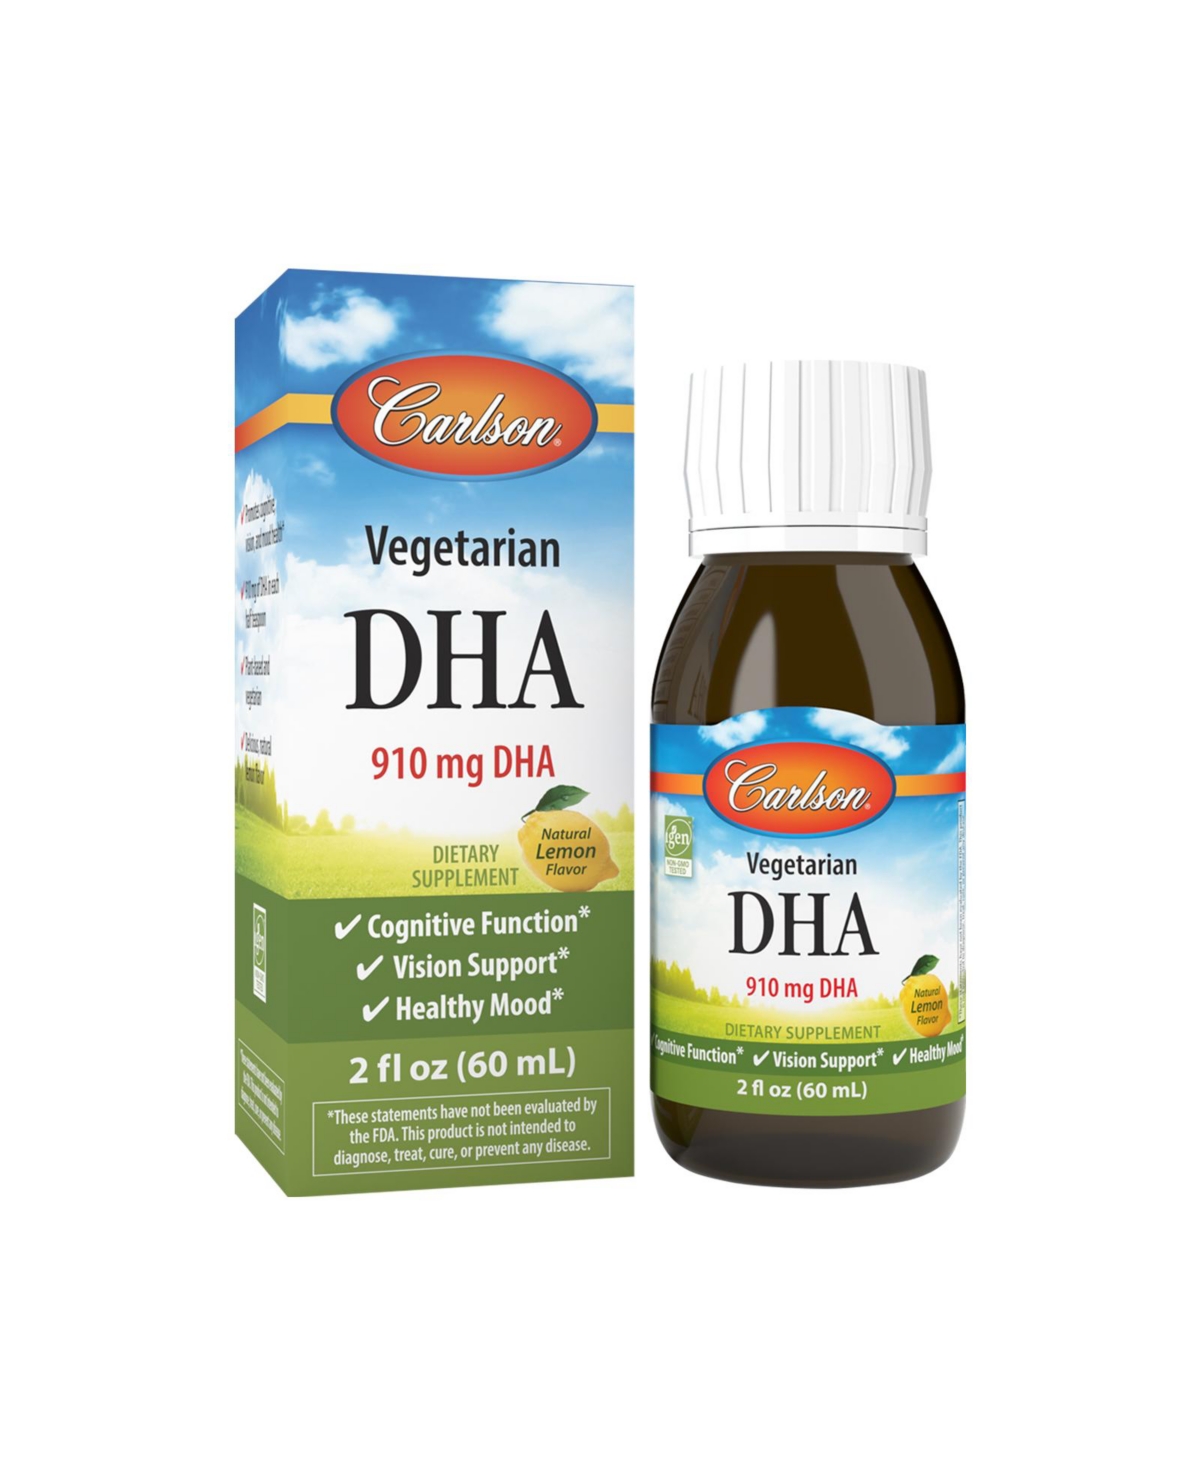 Carlson - Vegetarian Dha, 910 mg Dha, Cognitive Function, Mood Health, Plant-Based, Lemon, 60 mL (2 fl oz)